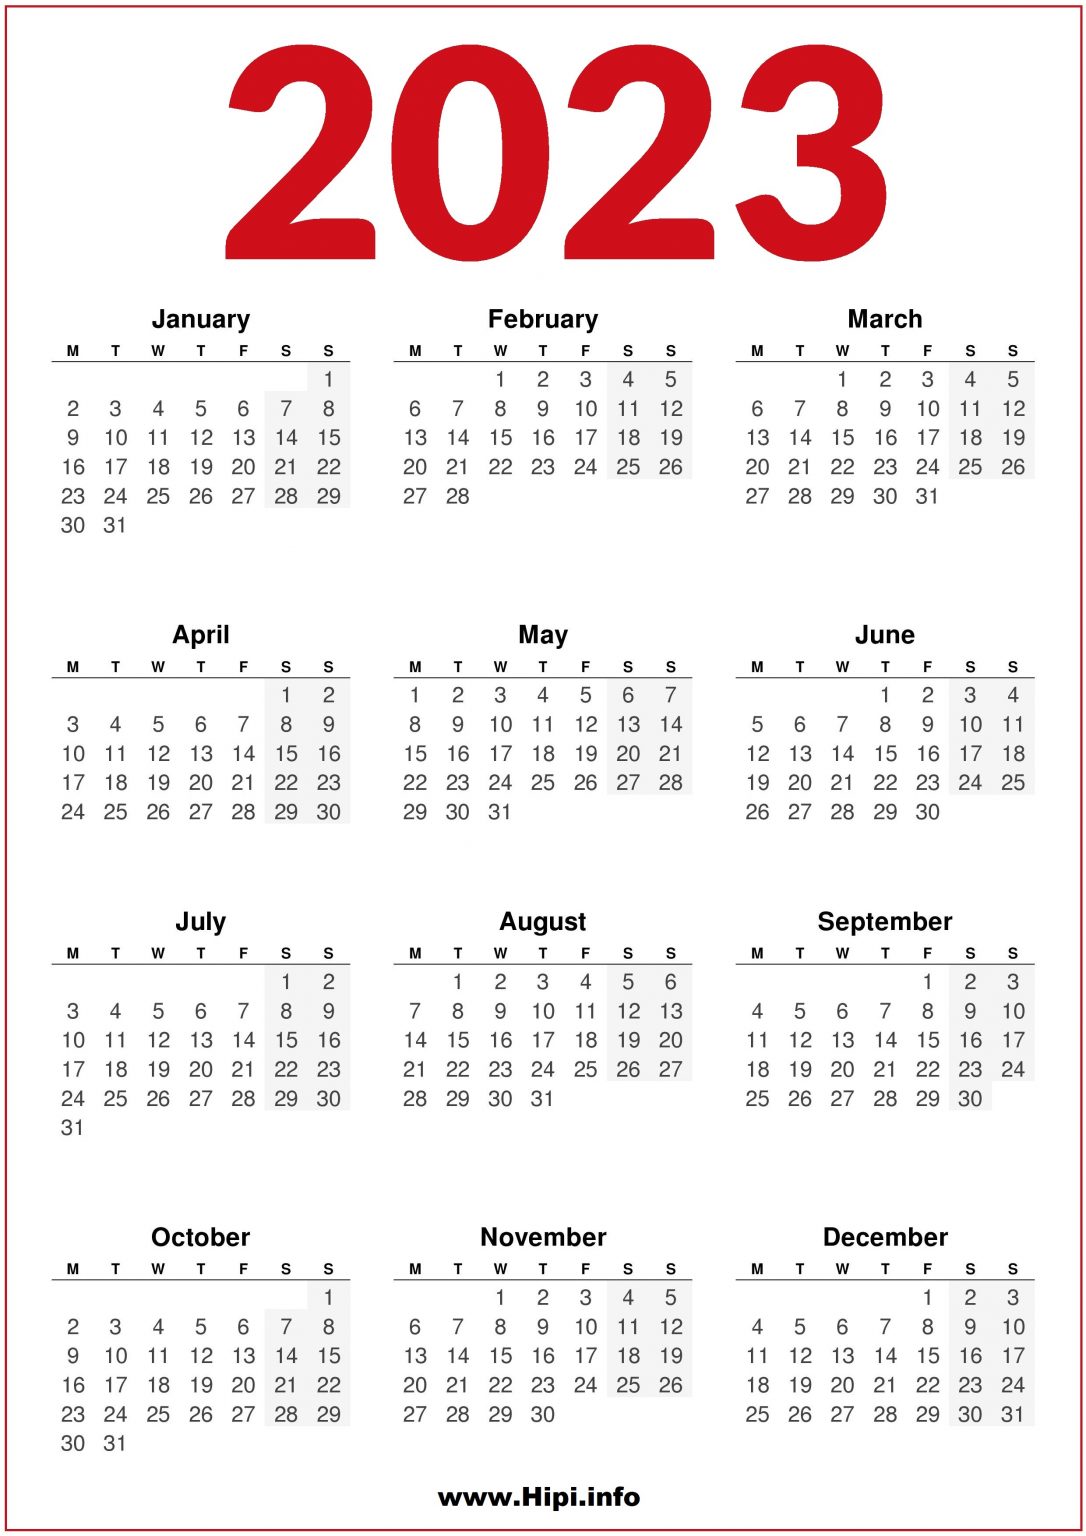 free-printable-2023-calendar-united-kingdom-uk-hipi-info-calendars